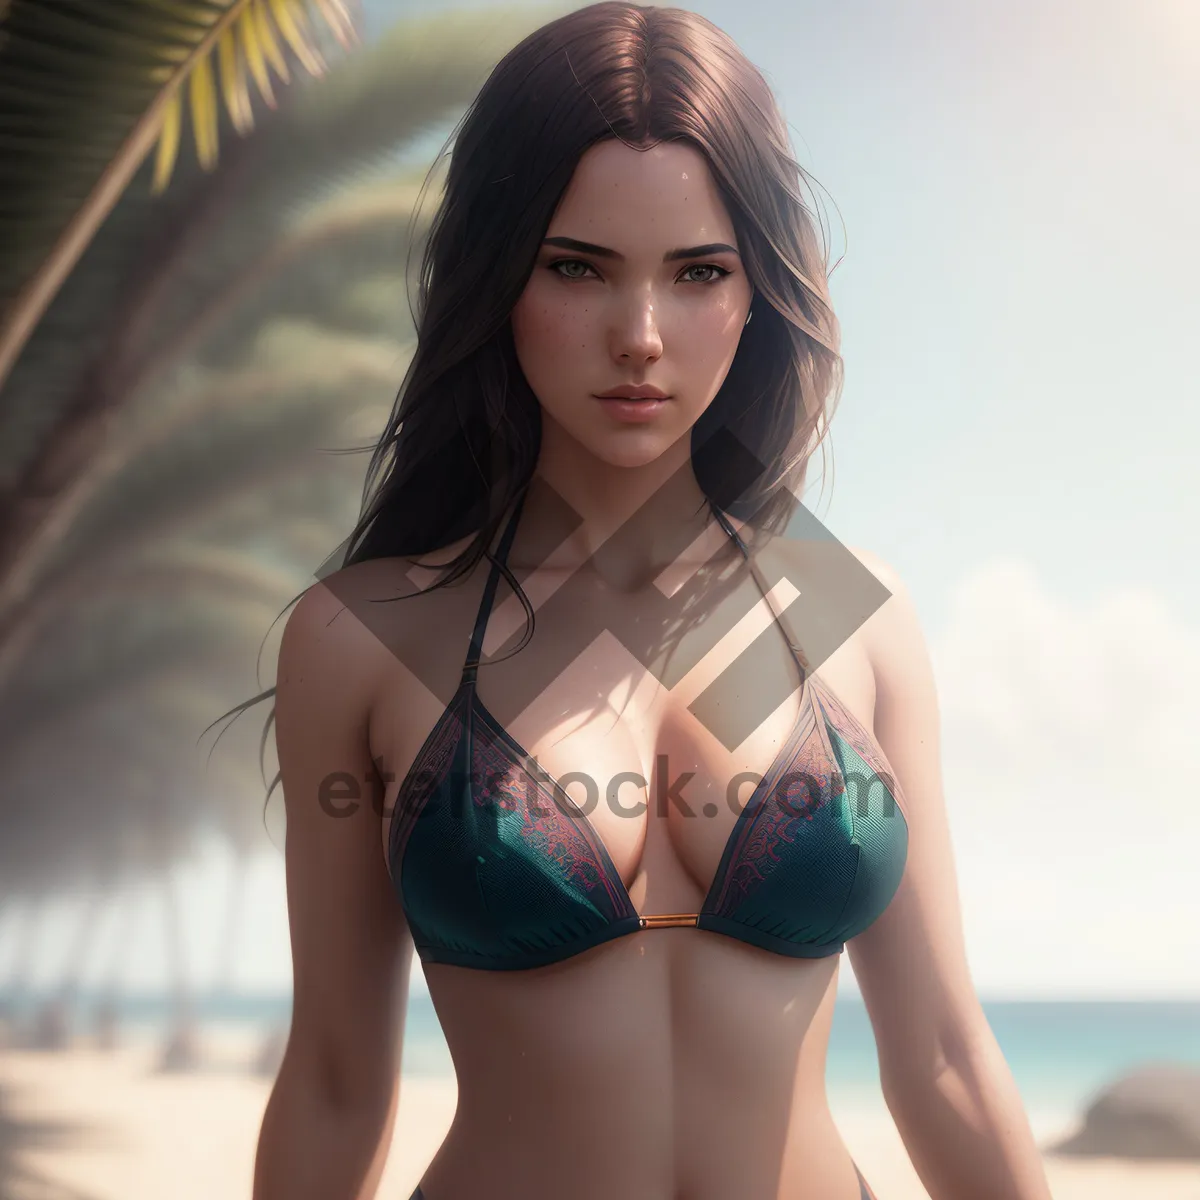 Picture of Beach Babe in Stylish Bikini